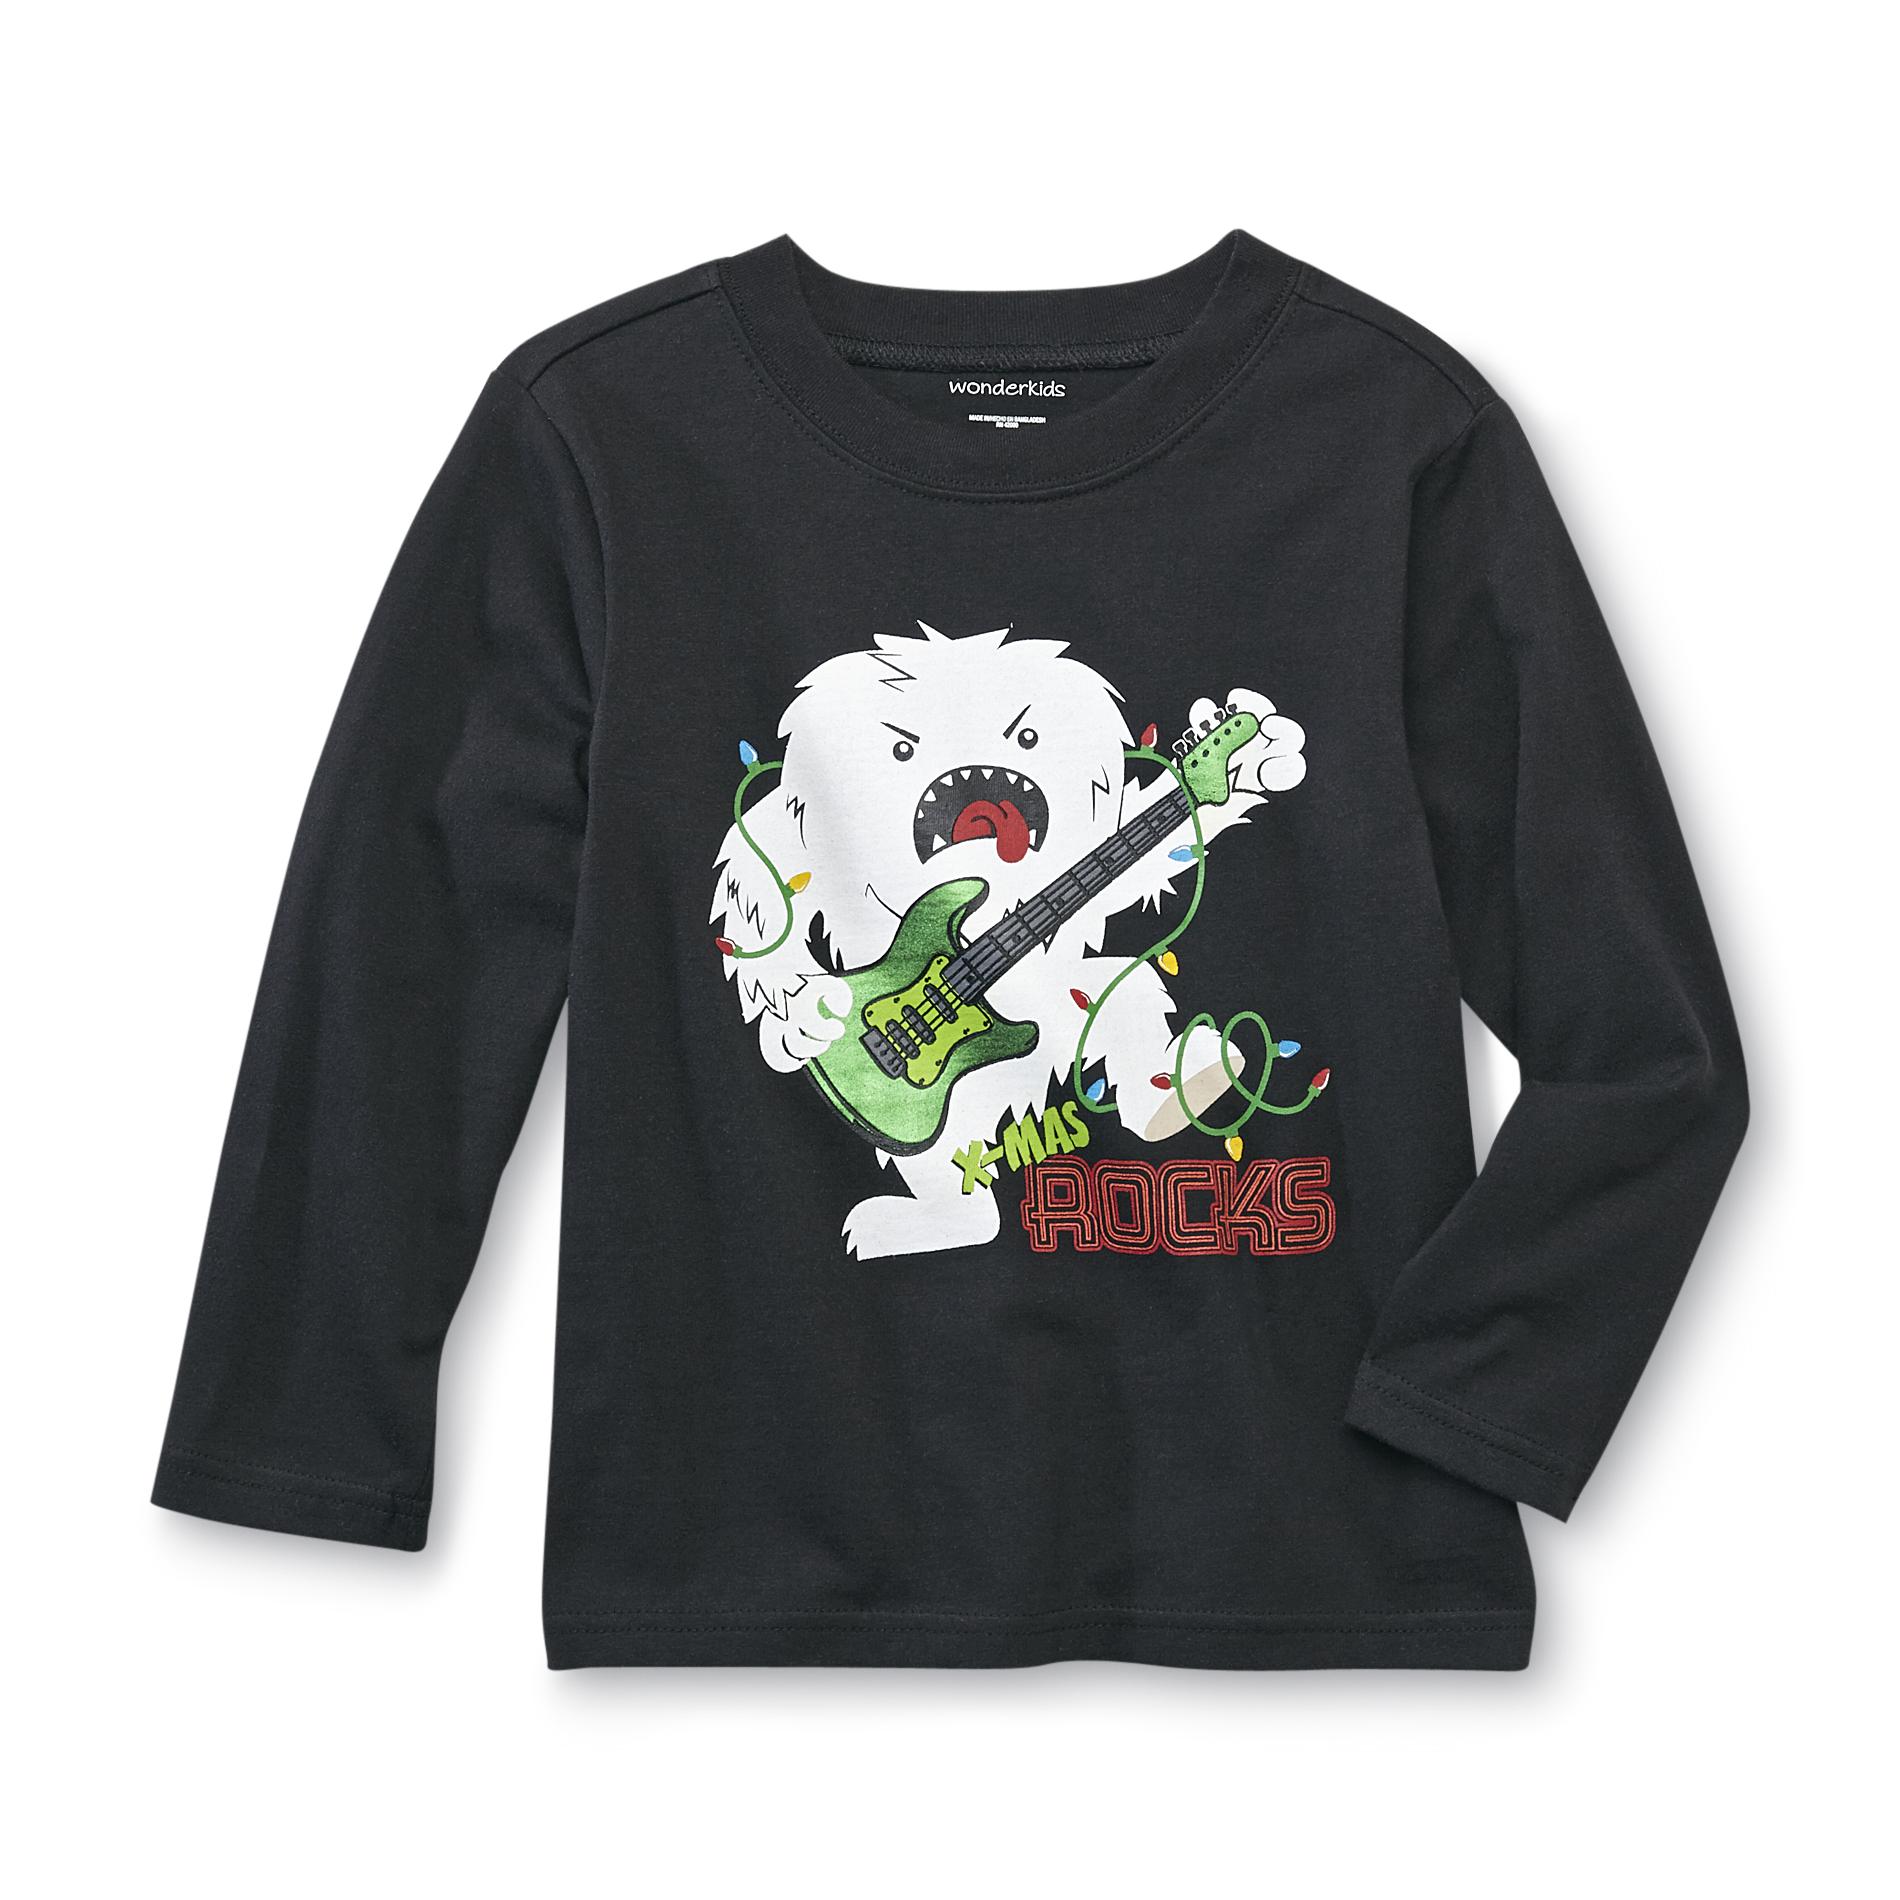 WonderKids Infant & Toddler Boy's Christmas Long Sleeve T-Shirt - Abominable Snowman Rocks